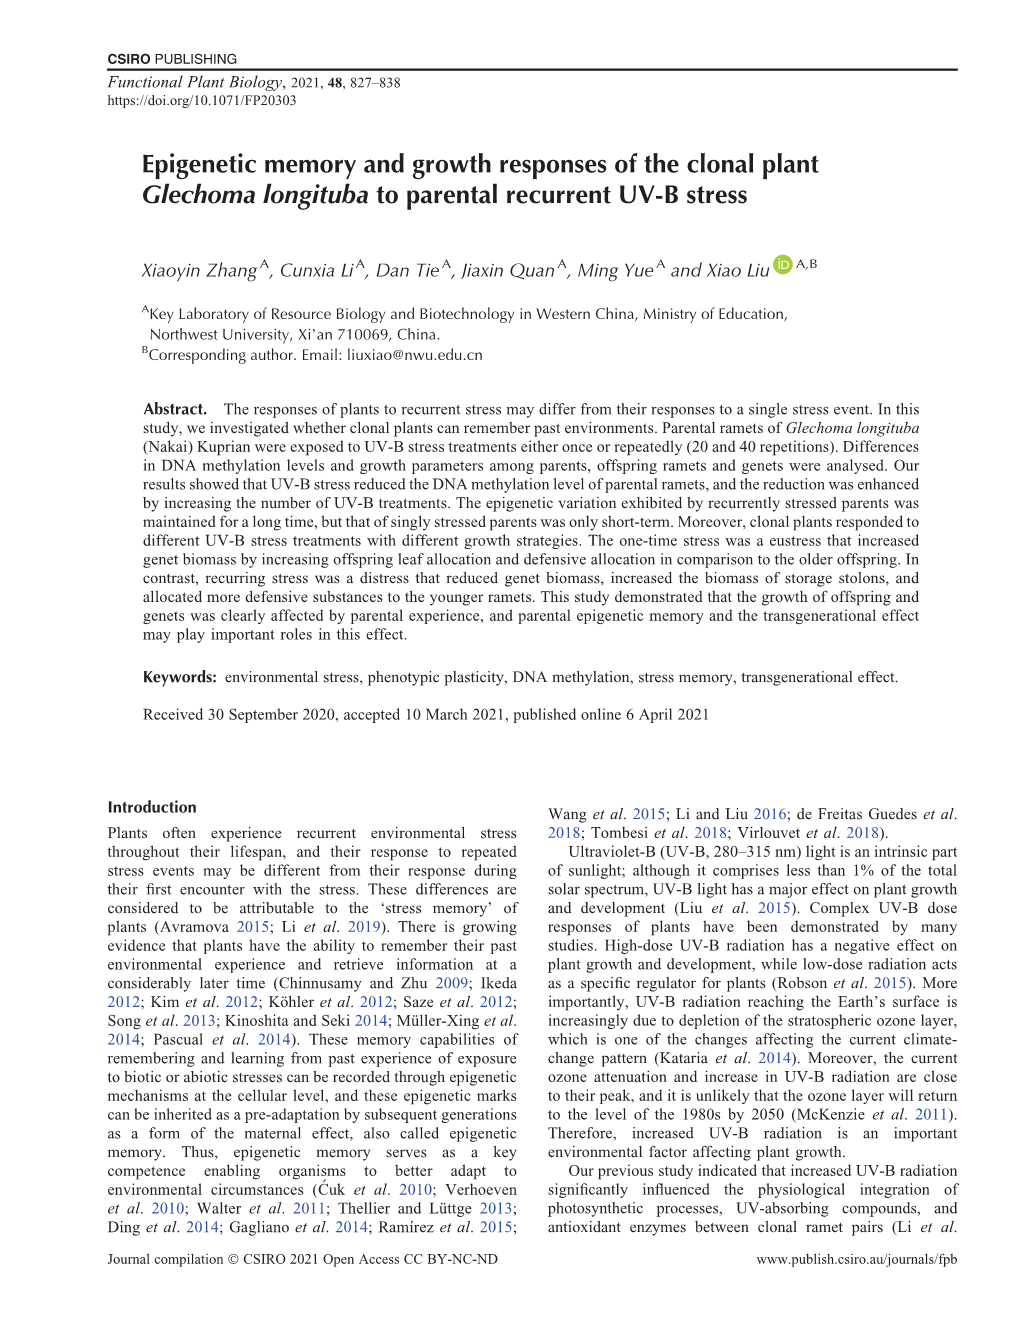 Epigenetic Memory and Growth Responses of the Clonal Plant Glechoma Longituba to Parental Recurrent UV-B Stress